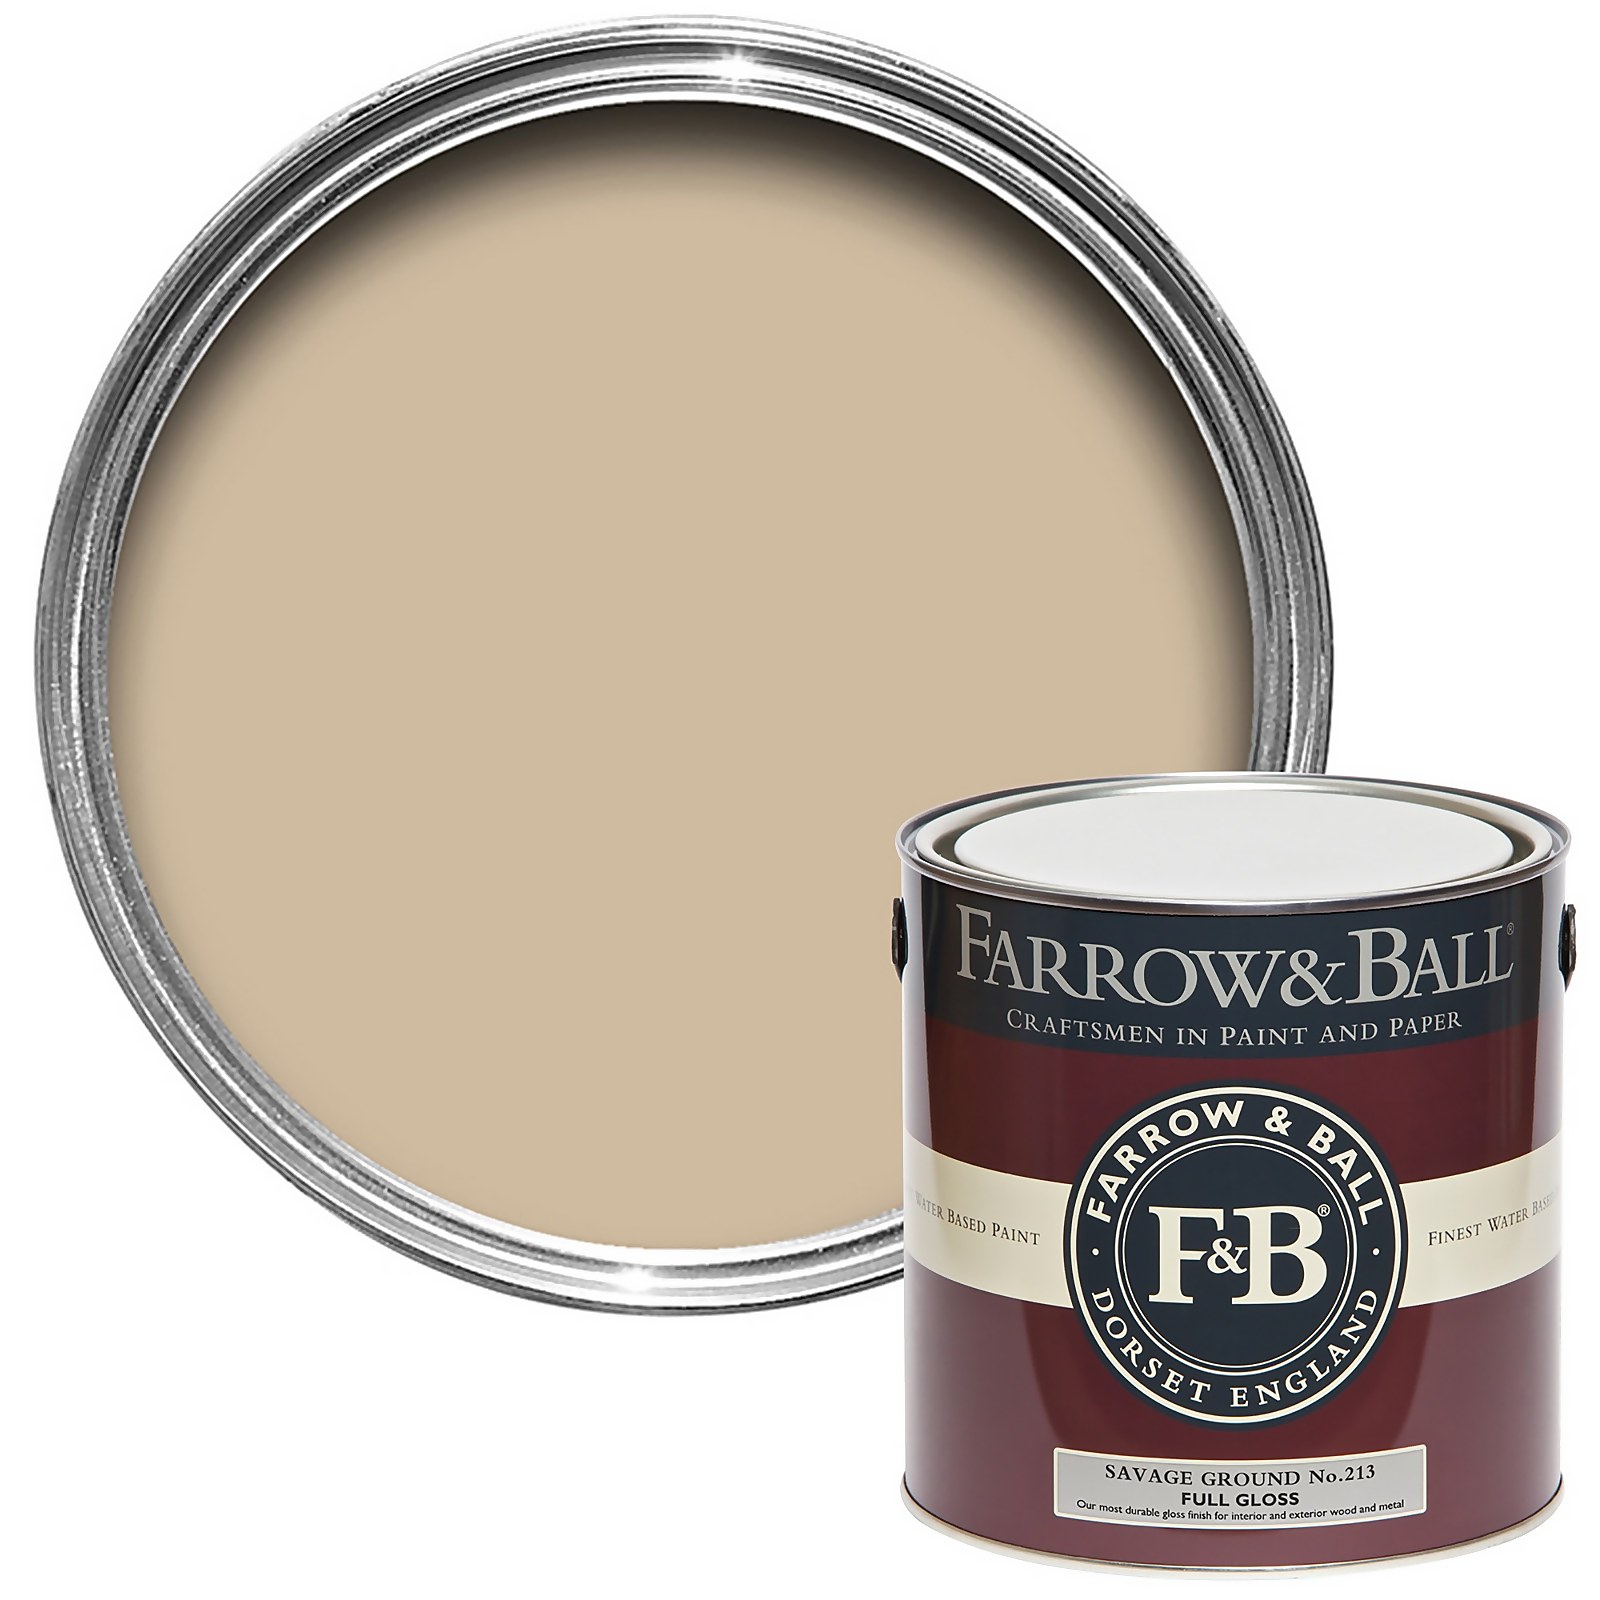 Farrow & Ball Full Gloss Paint Savage Ground No.213 - 2.5L